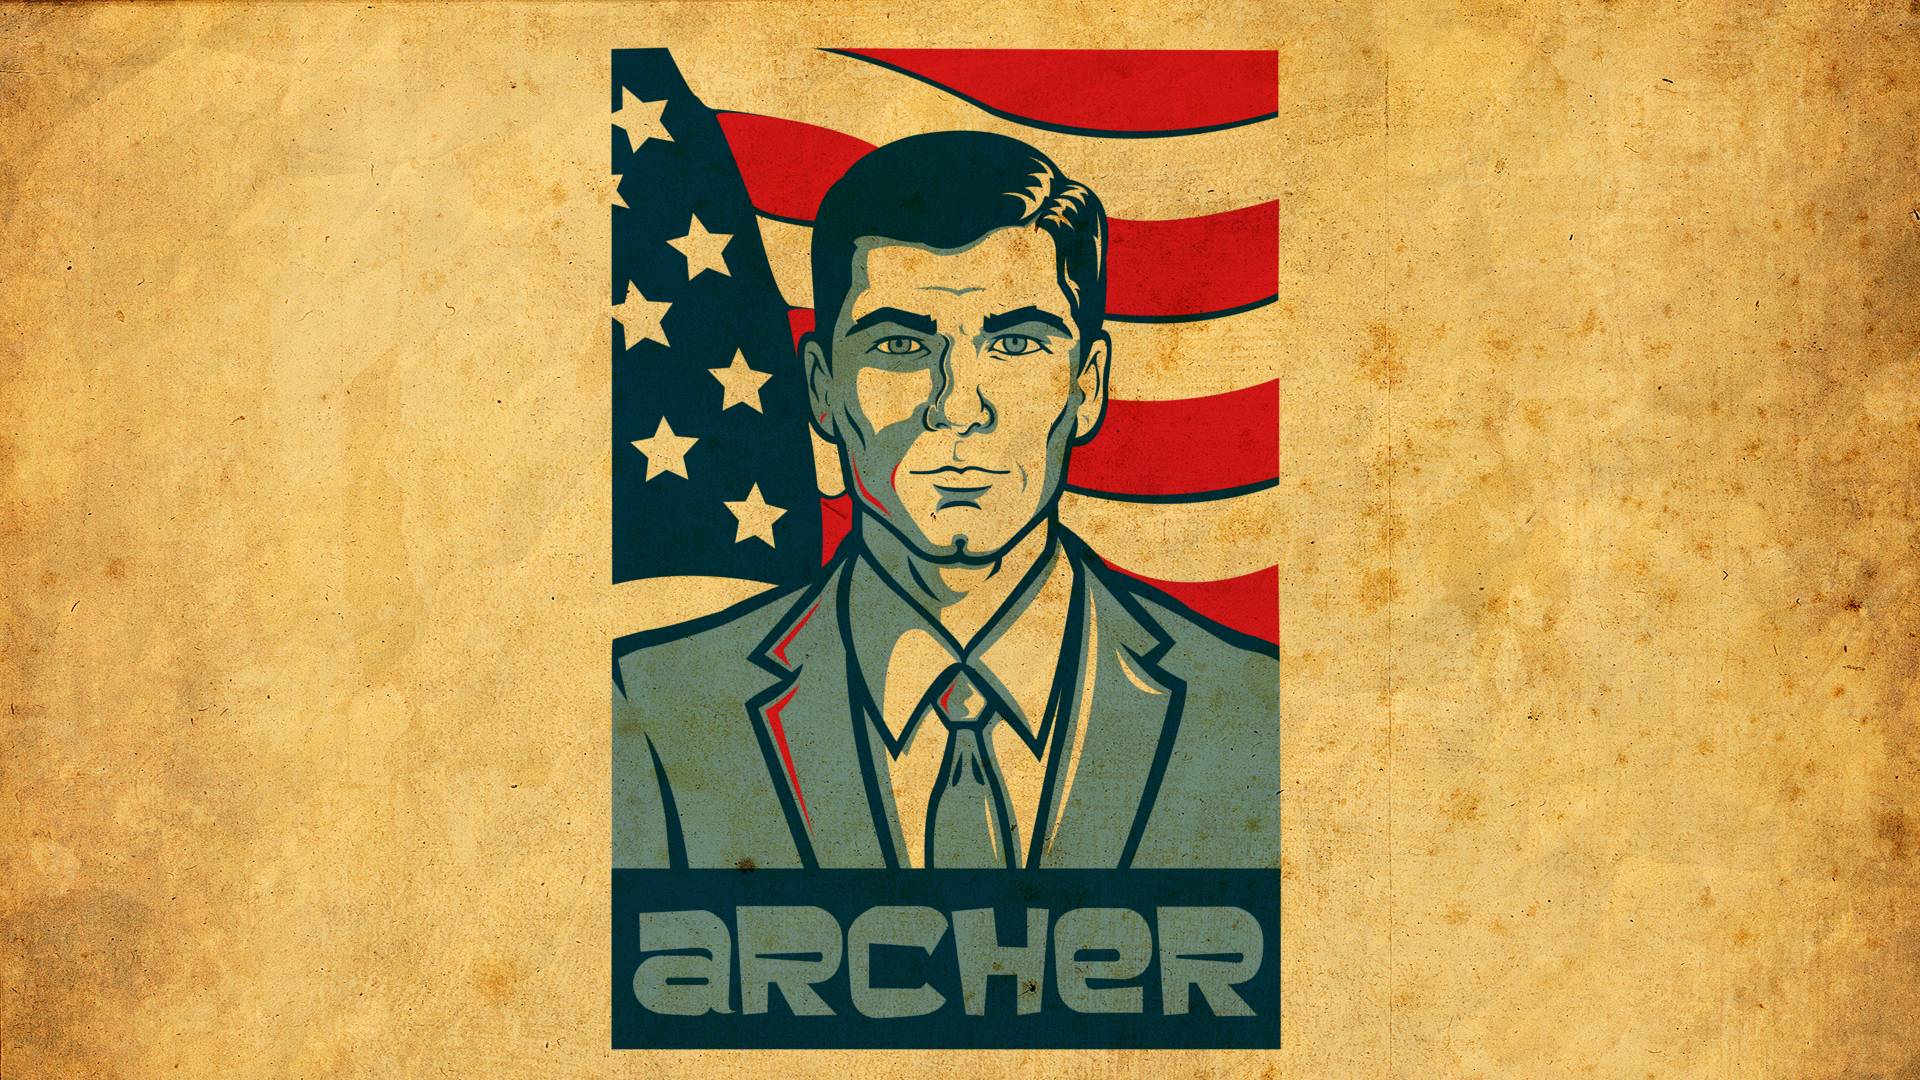 آرچر (Archer)